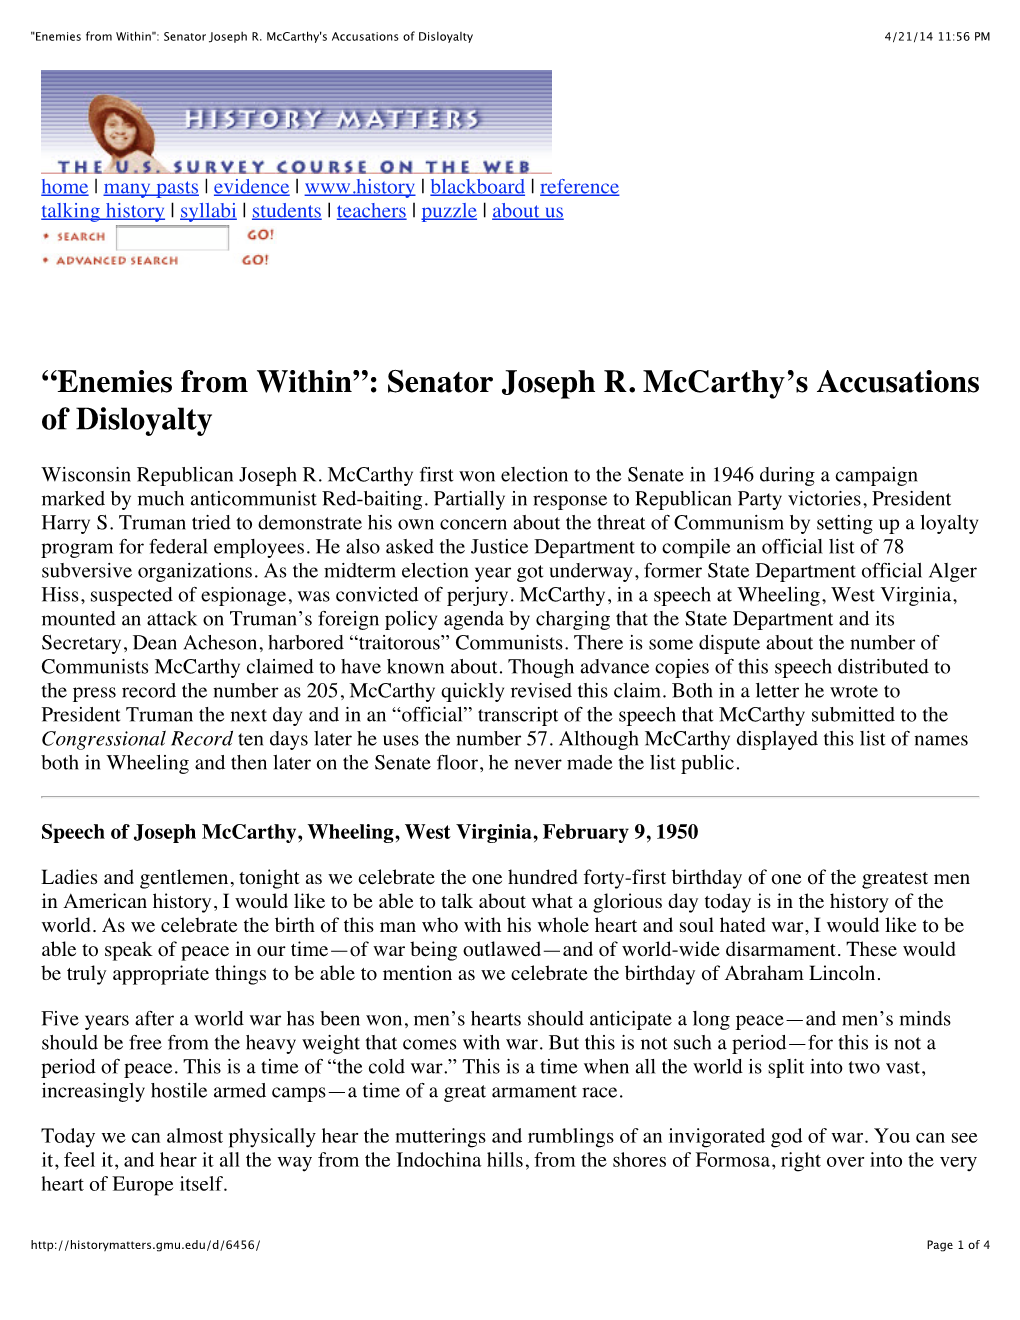 Senator Joseph R. Mccarthy's Accusations of Disloyalty 4/21/14 11:56 PM